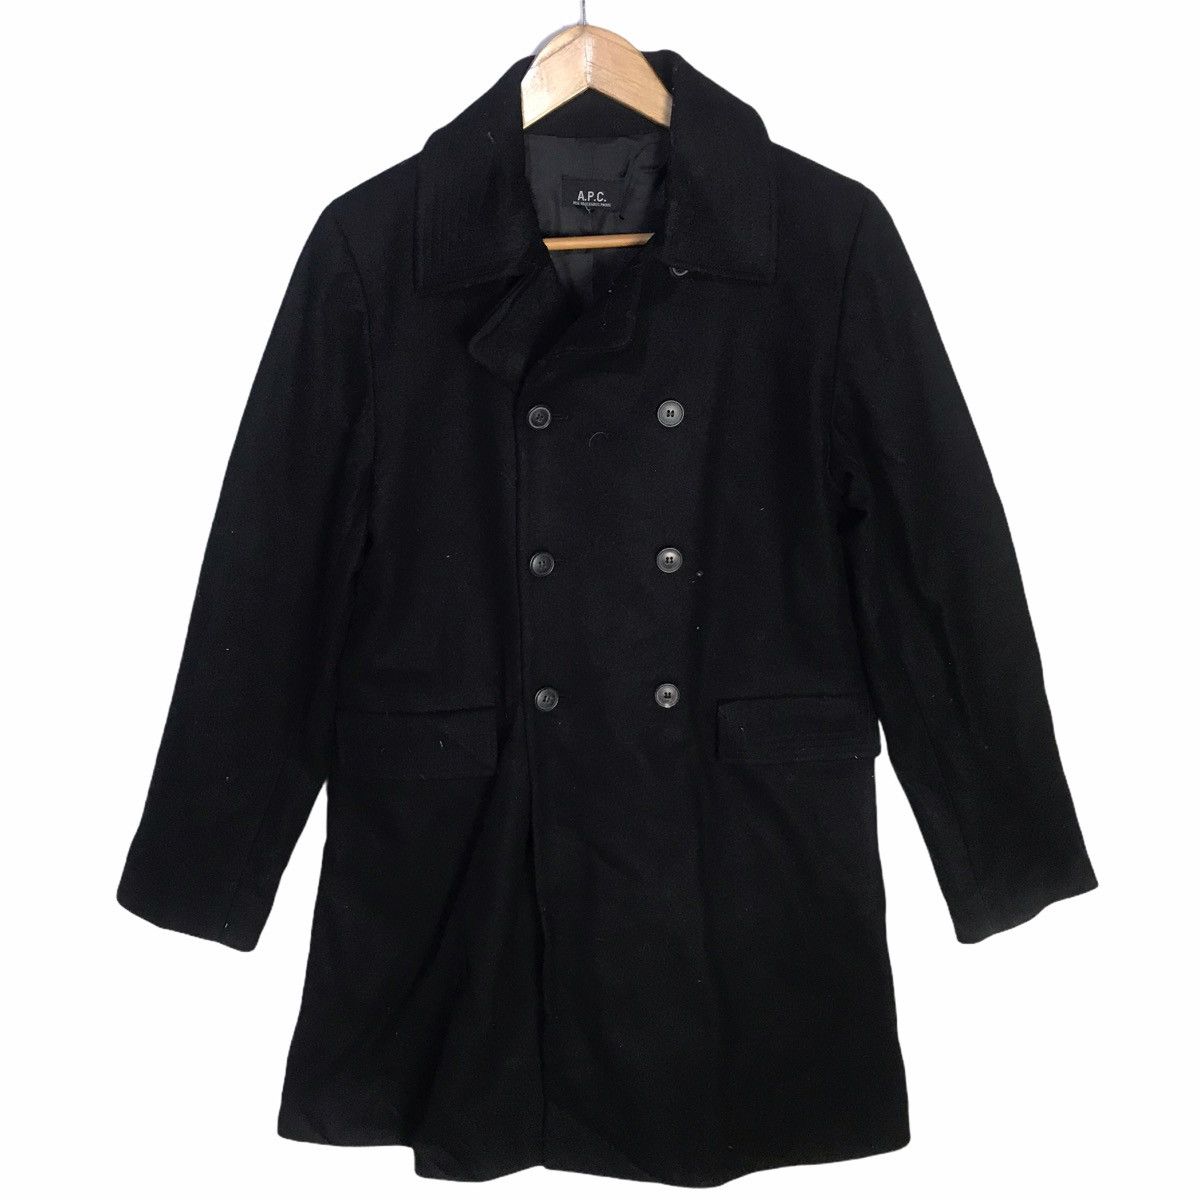 Apc wool coat - 1